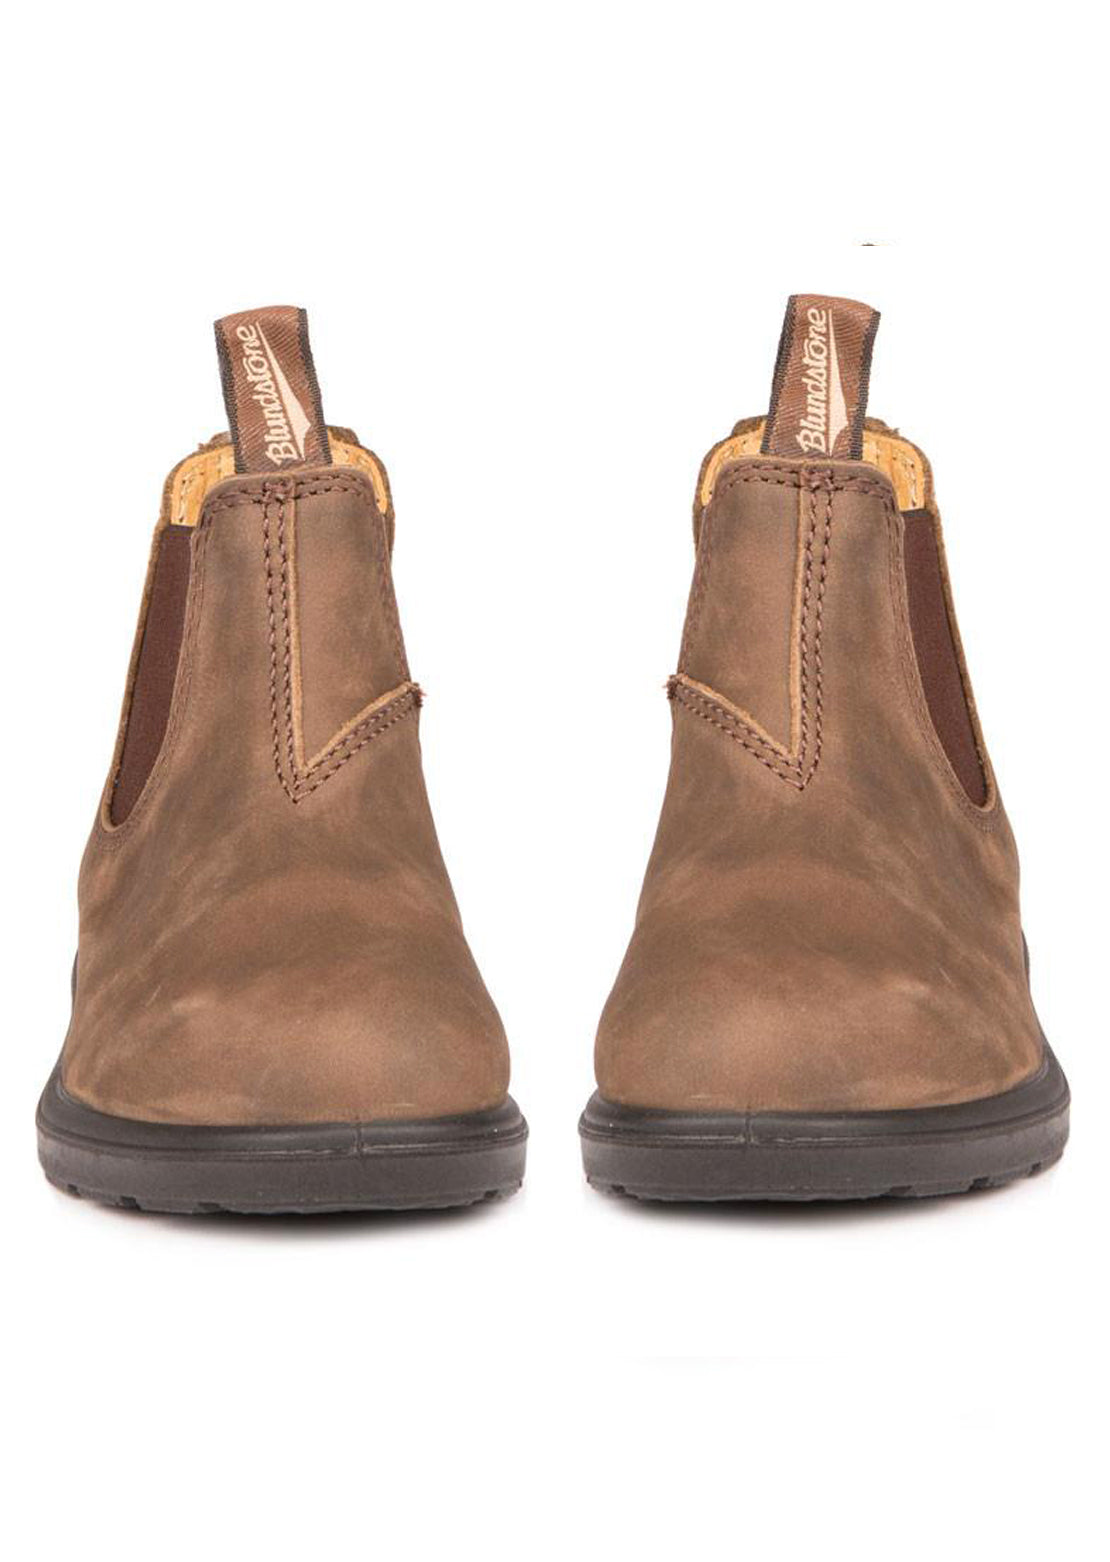 Blundstone Junior 565 Blunnies Boots (565) Rustic Brown